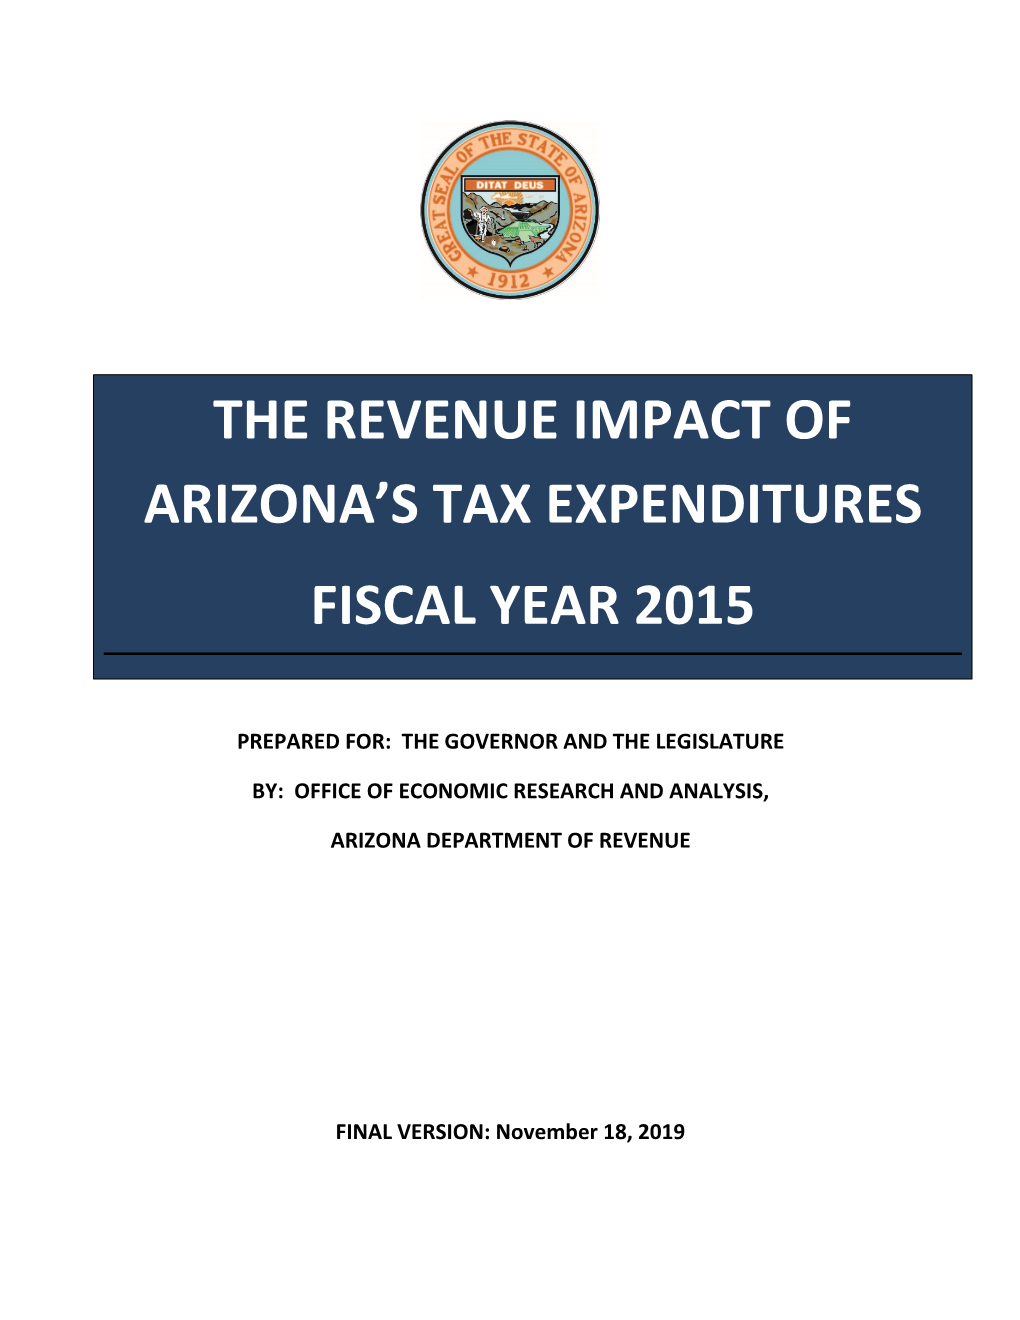 The Revenue Impact of Arizona's Tax Expenditures